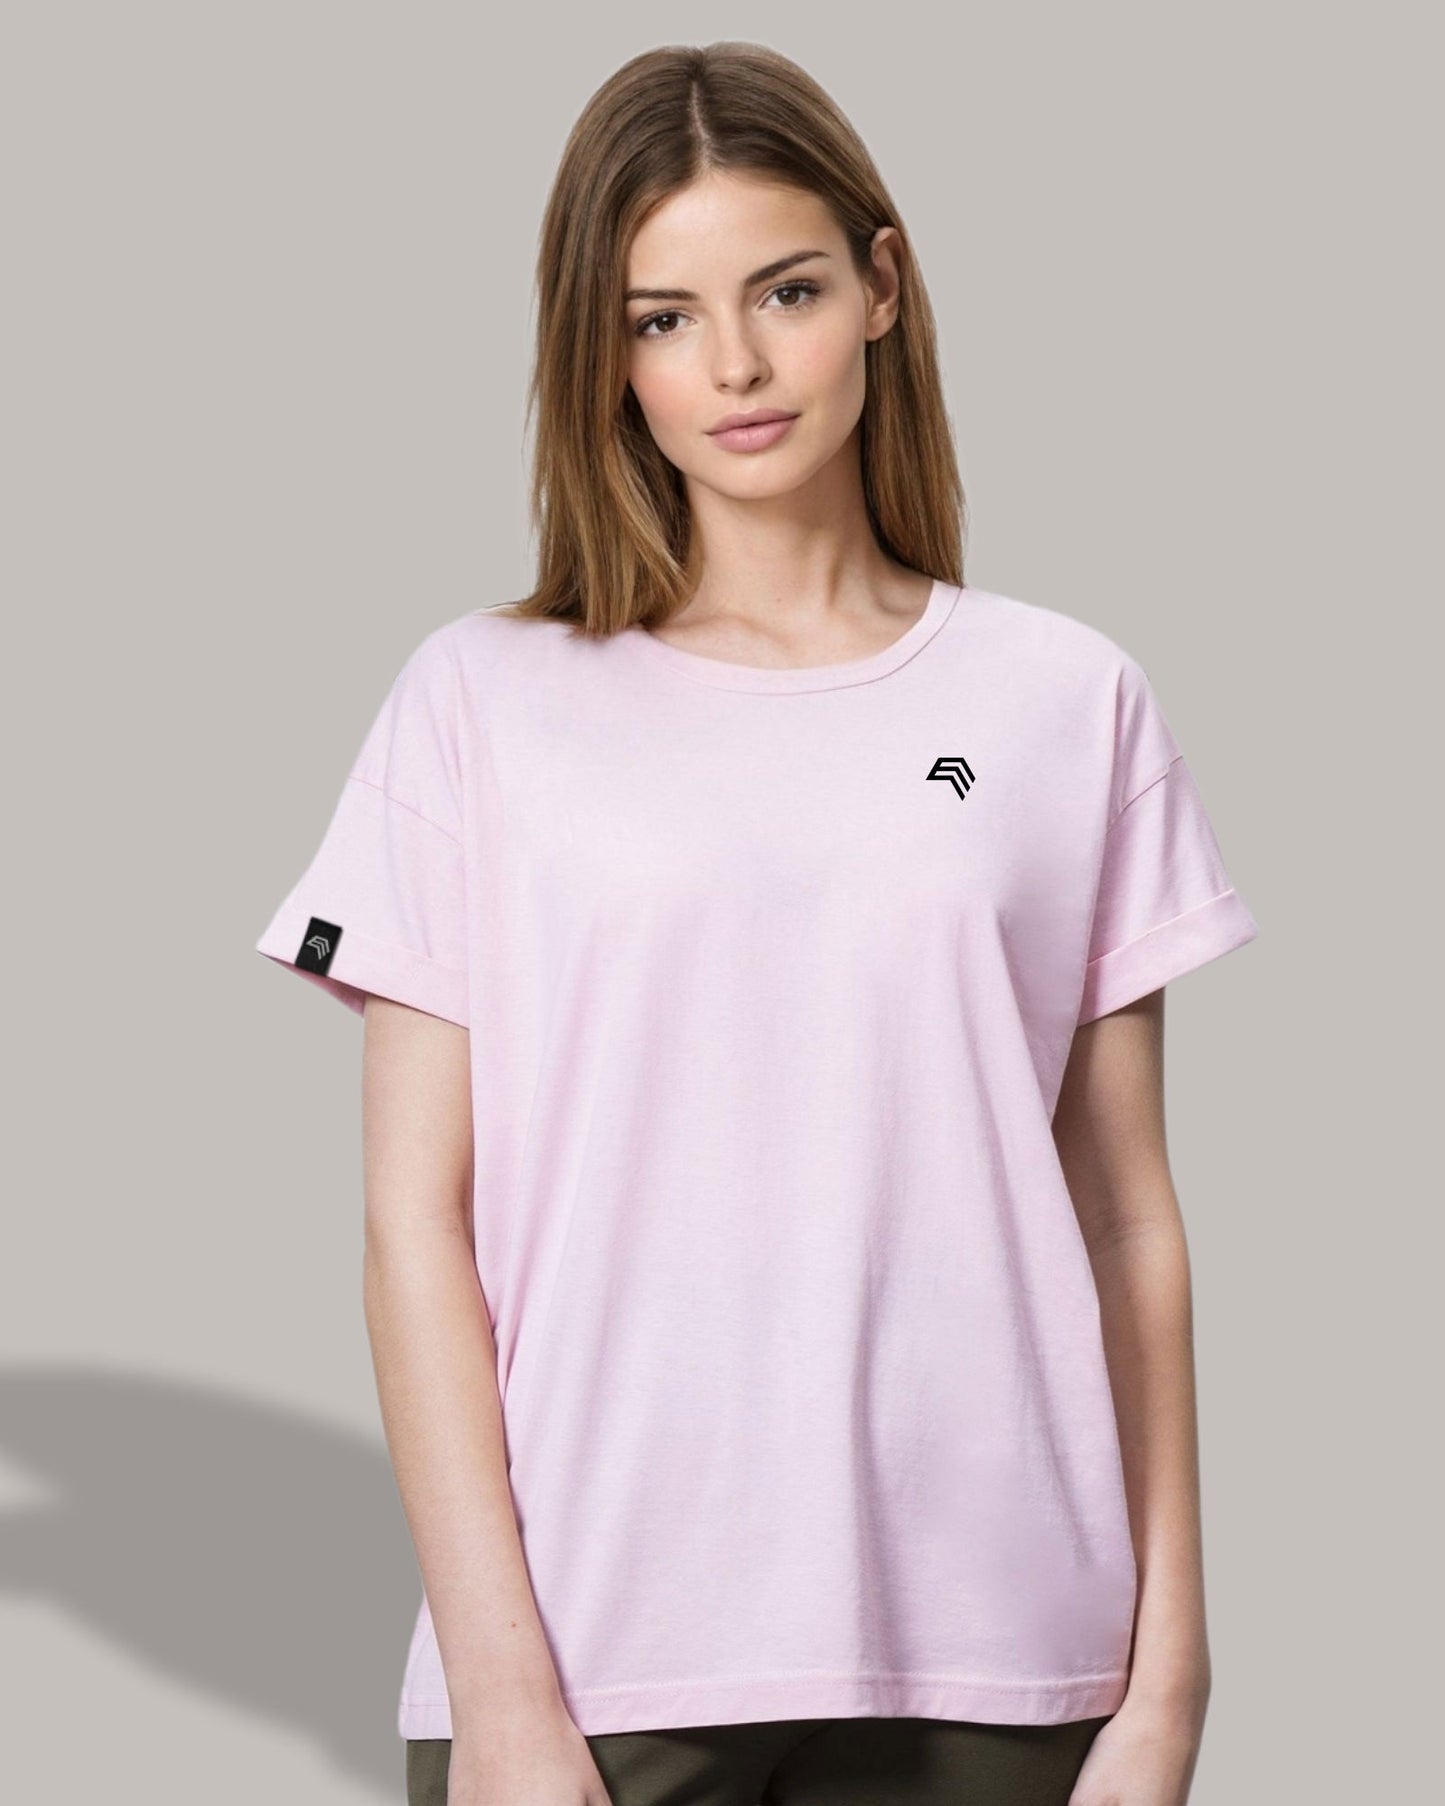 ― % ― MTS M193 ― Women's Bio-Baumwolle Oversized T-Shirt - Pink Rot [S / M]